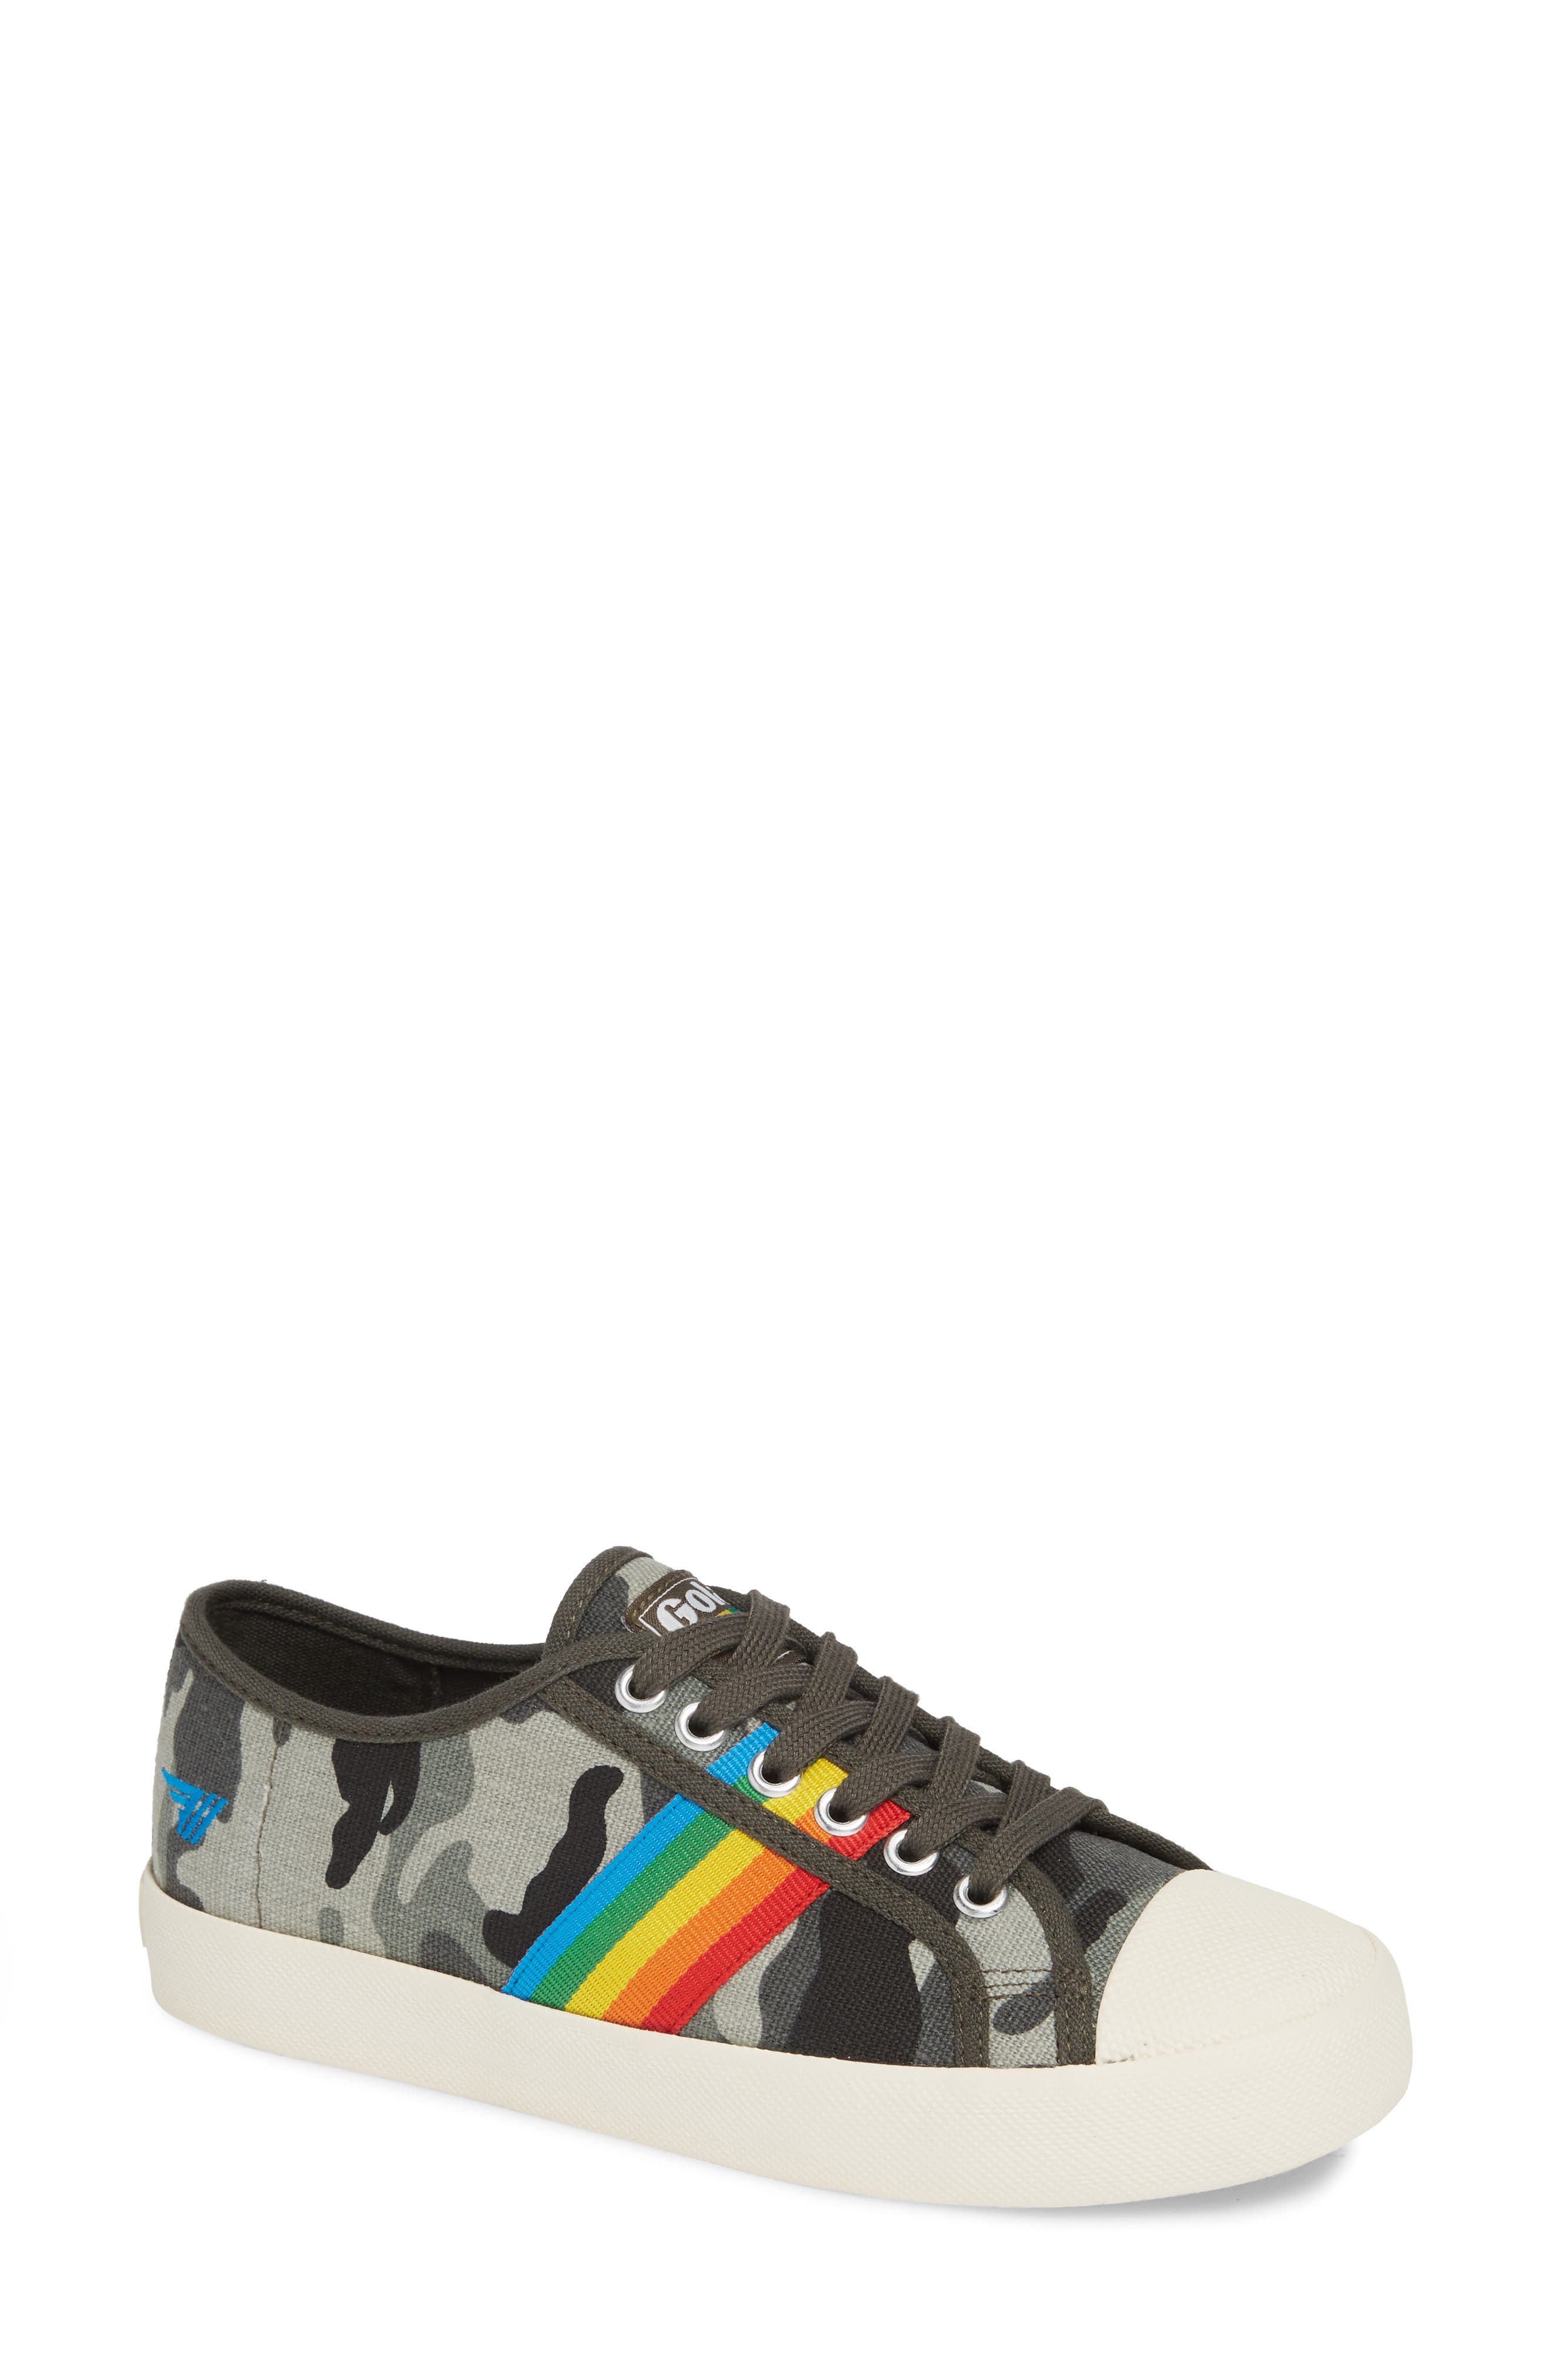 gola rainbow stripe sneakers